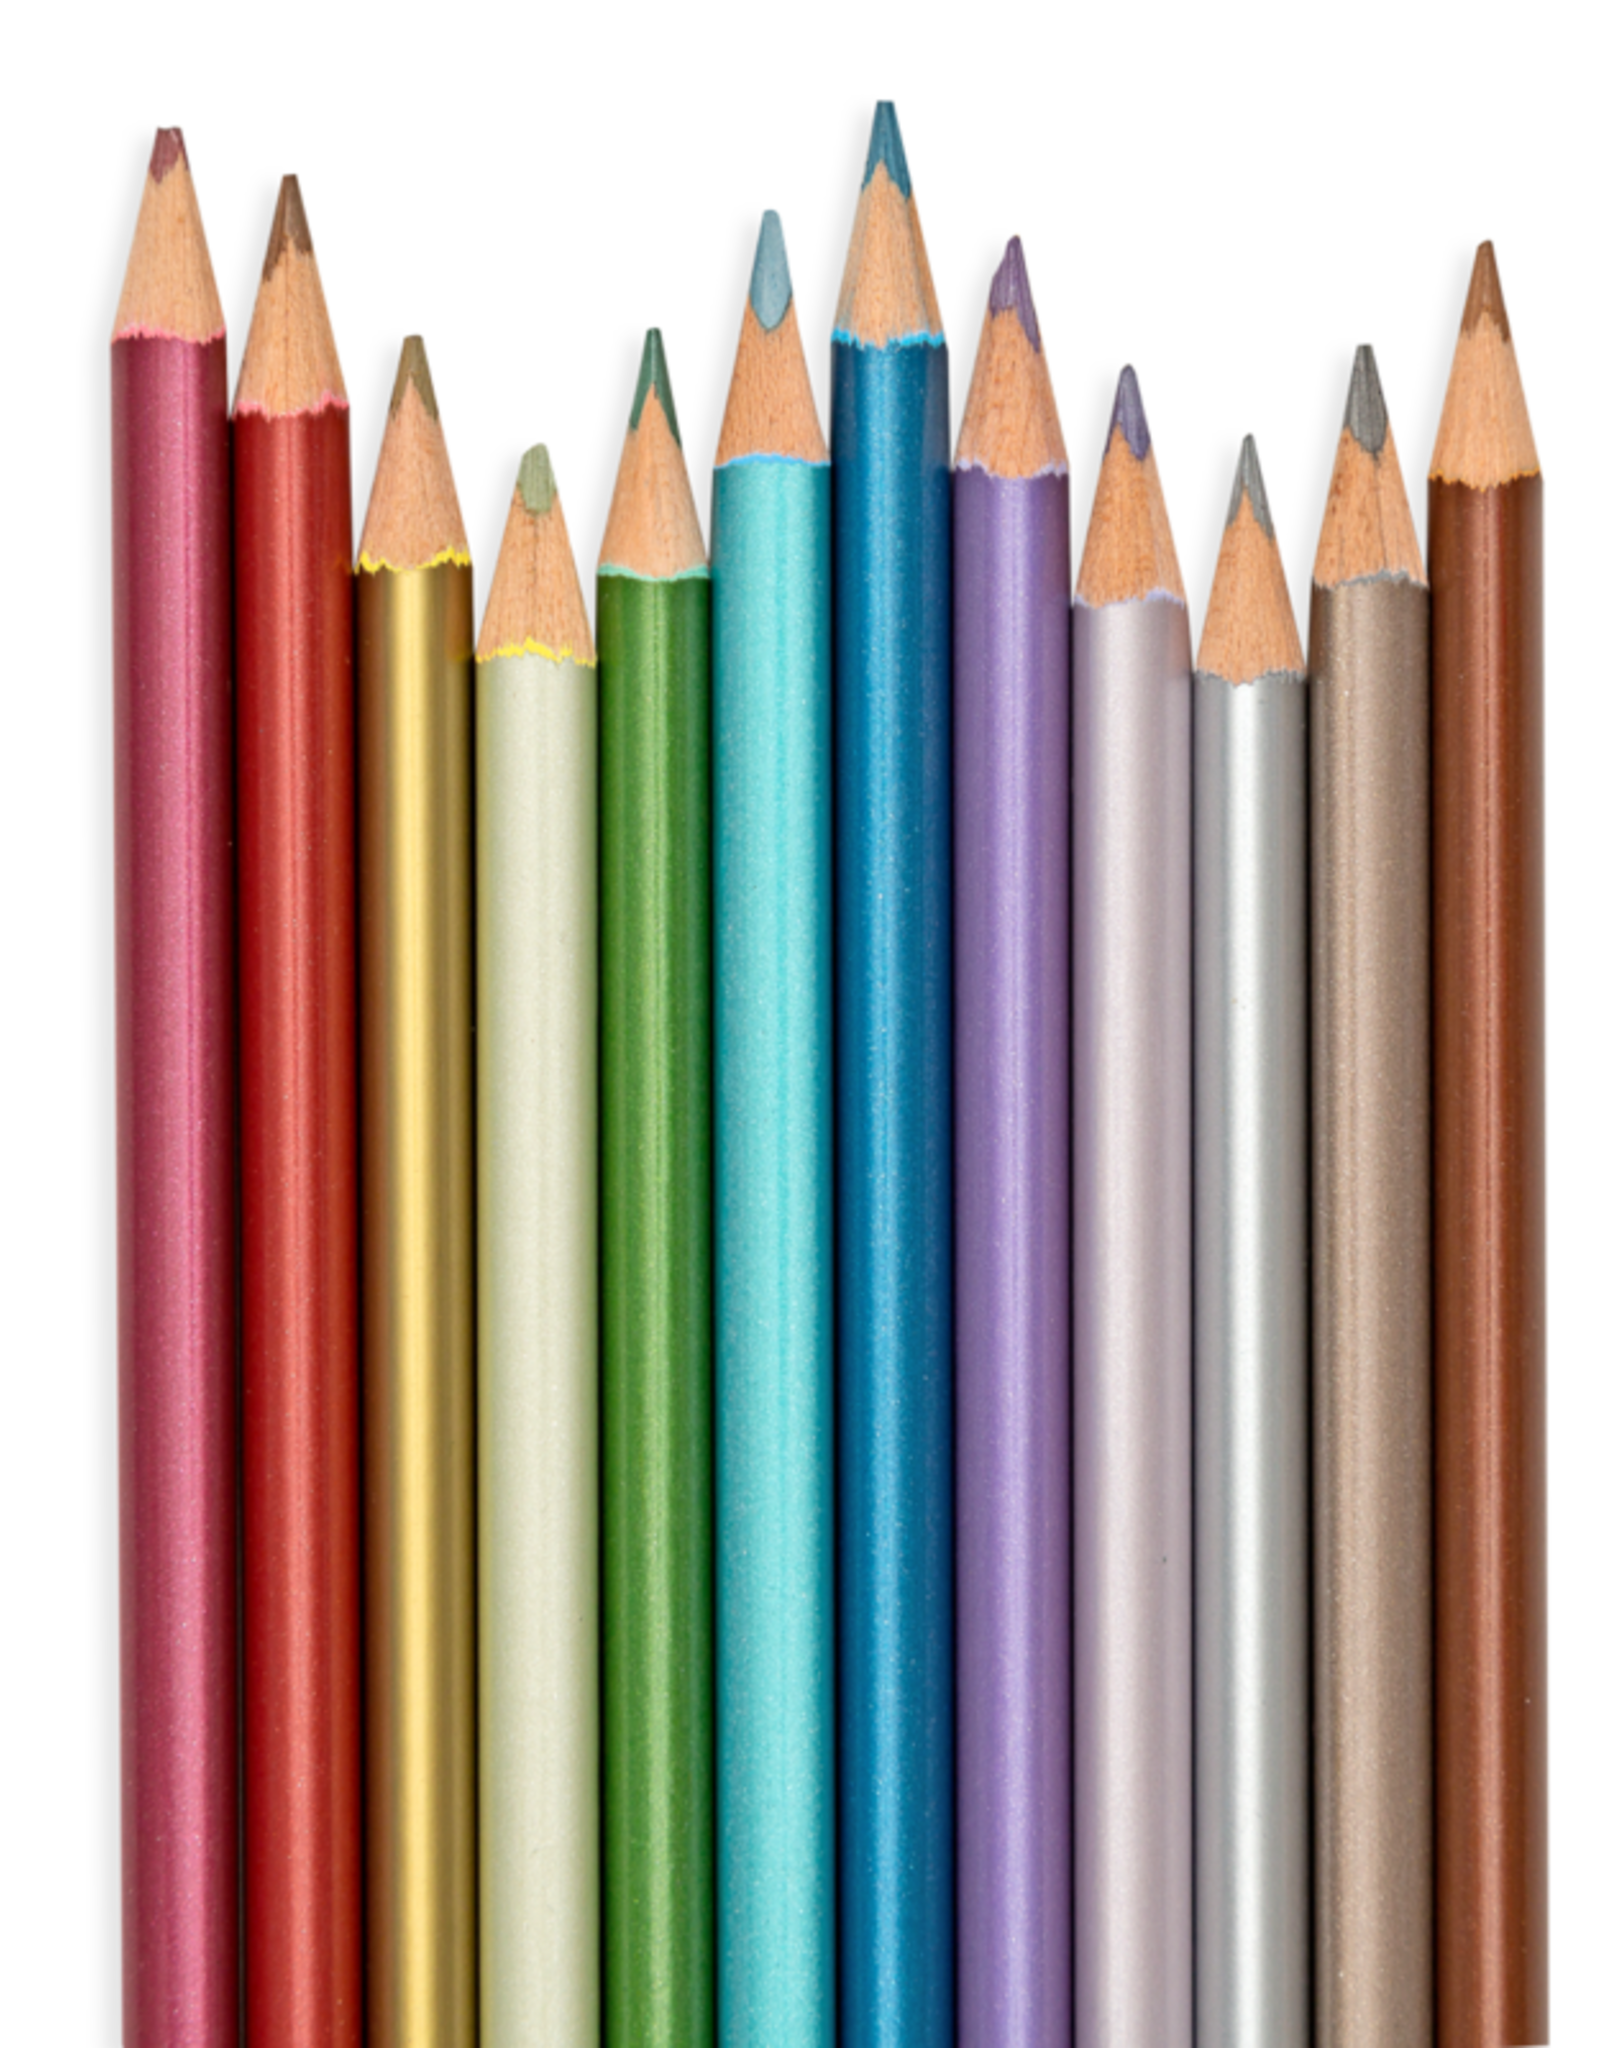 Ooly Modern Metallics Coloured Pencils